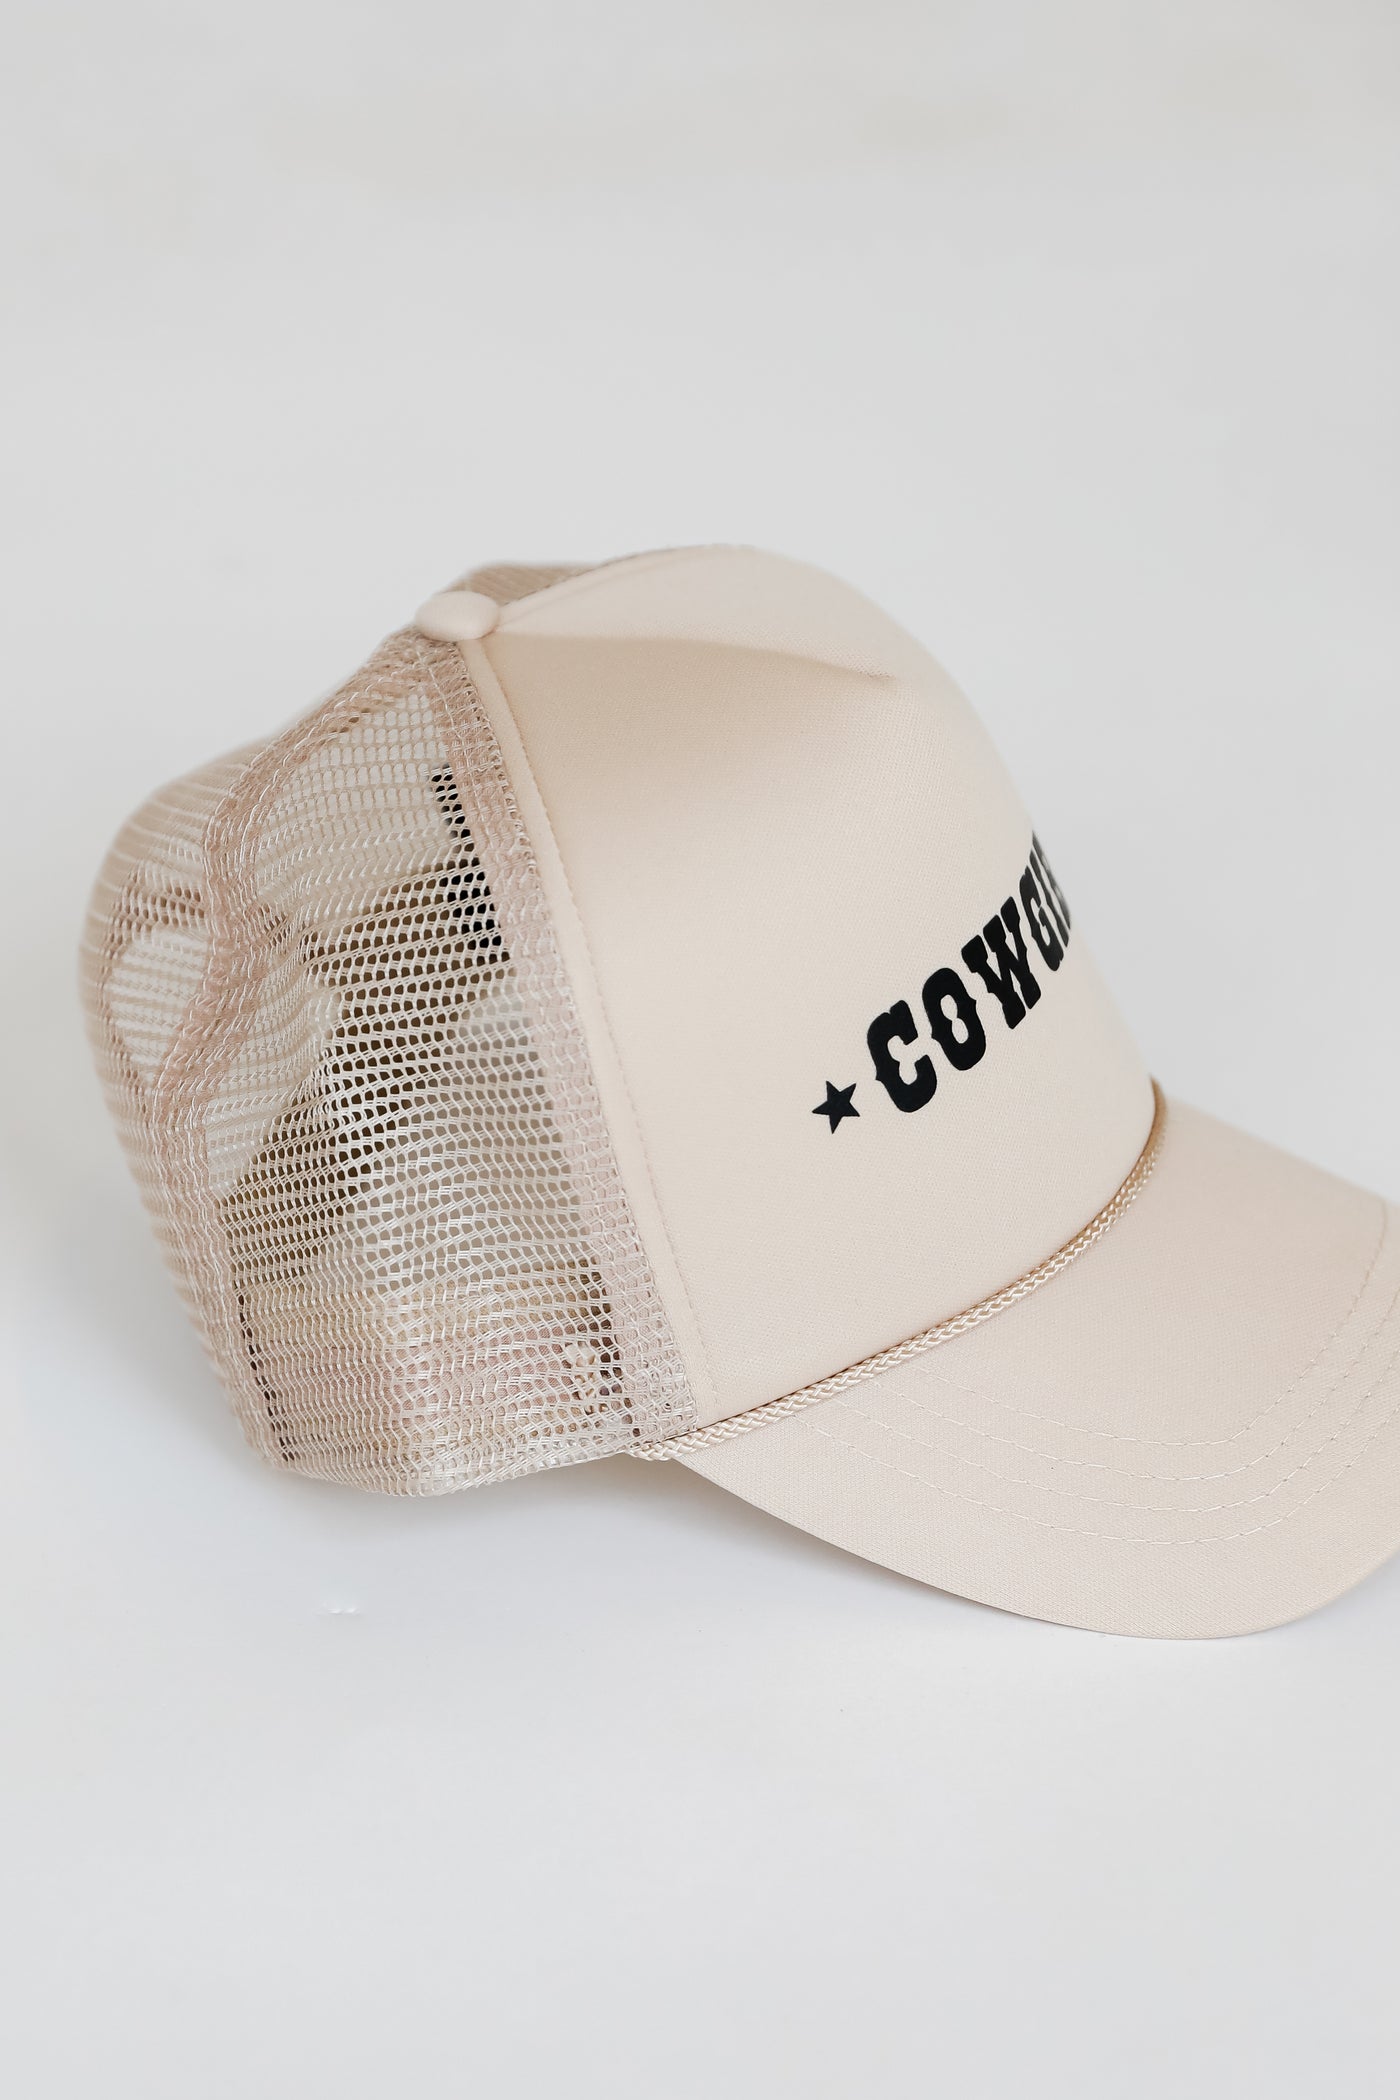 Cowgirl Trucker Hat flat lay